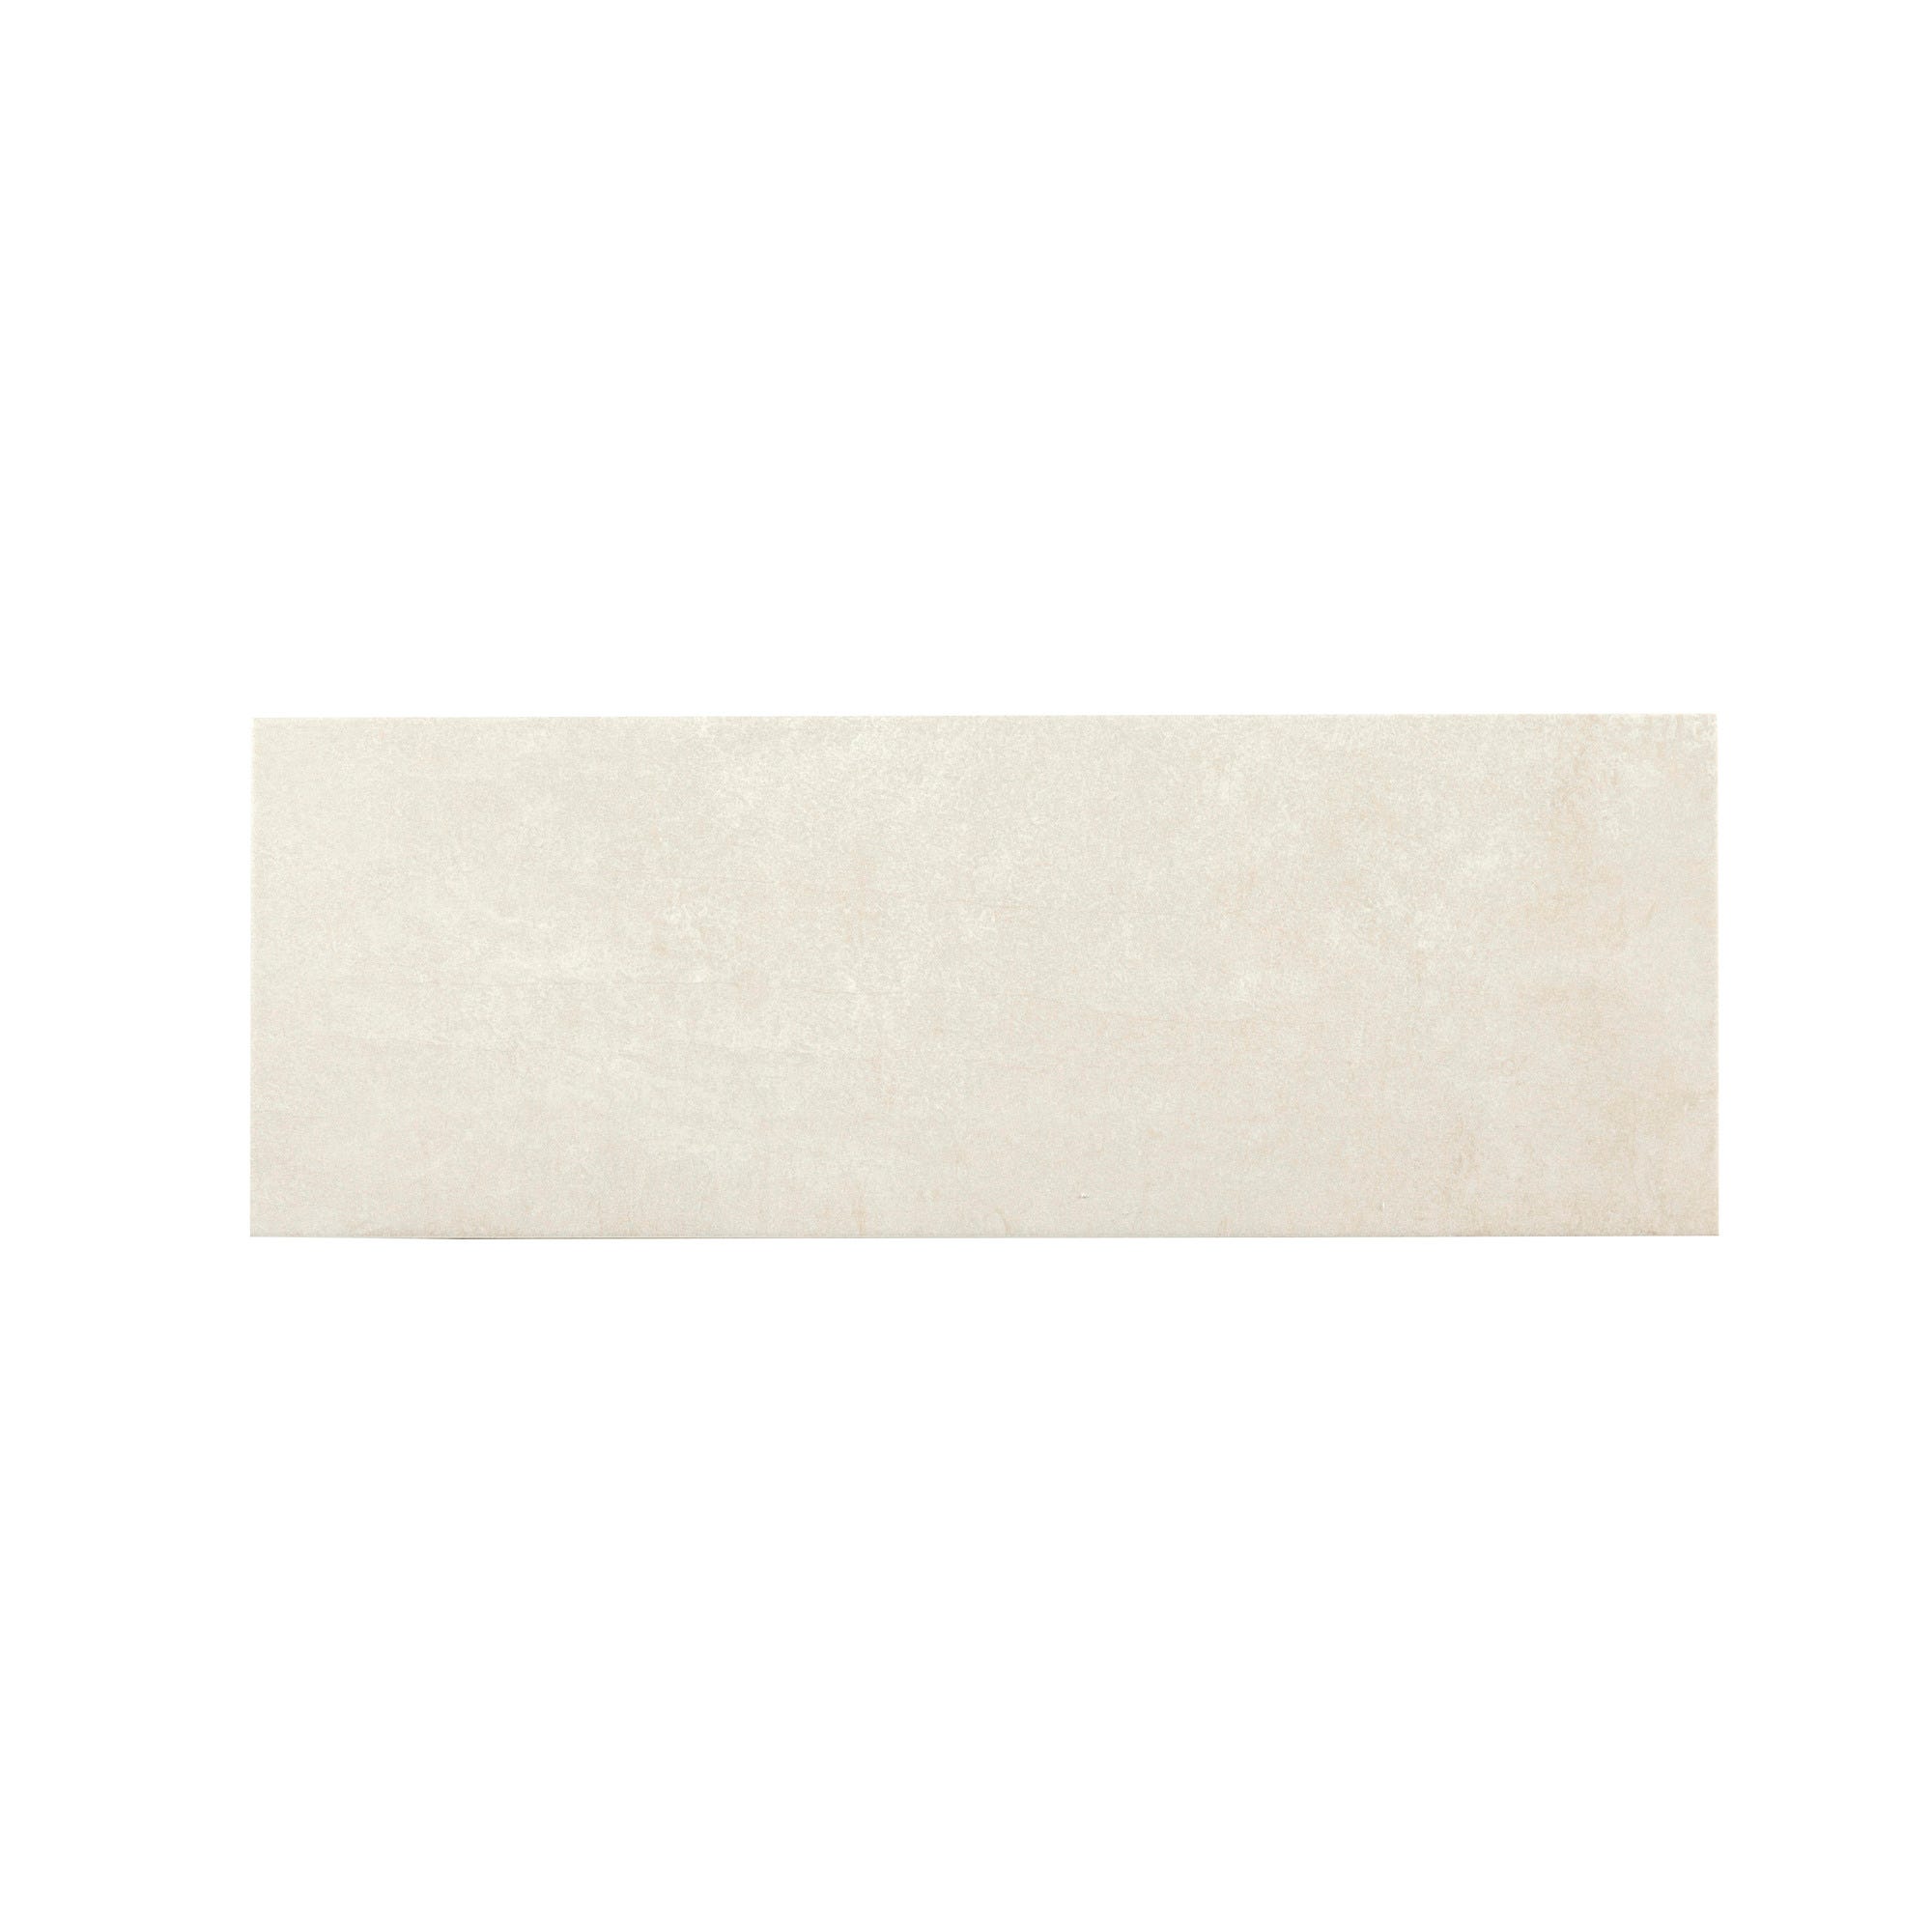 Faïence blanc uni l.25 x L.70 cm Arles 2